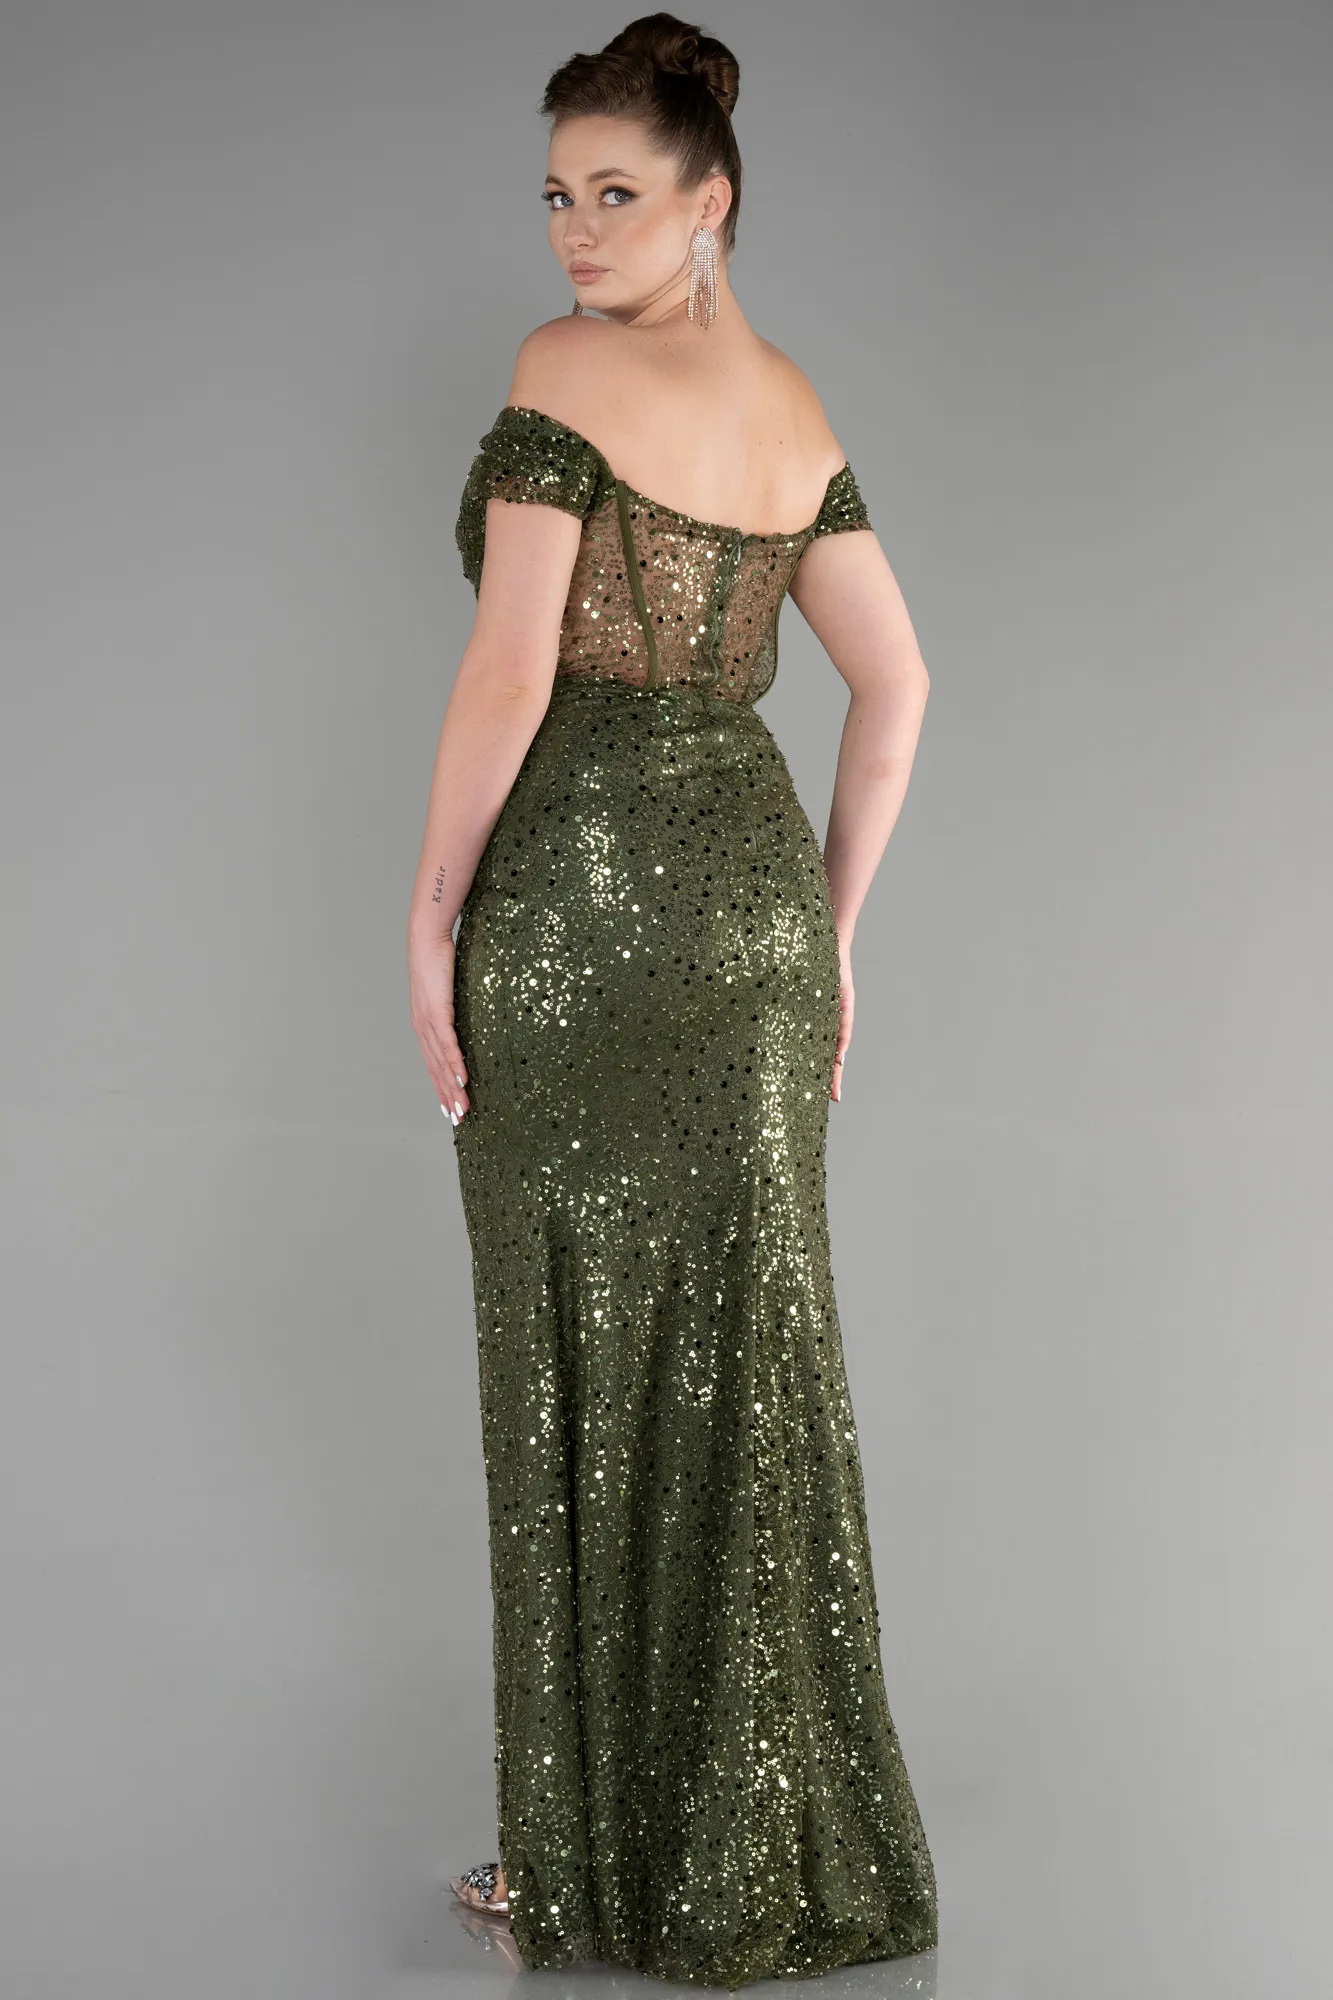 Olive Drab-Long Scaly Evening Dress ABU3498